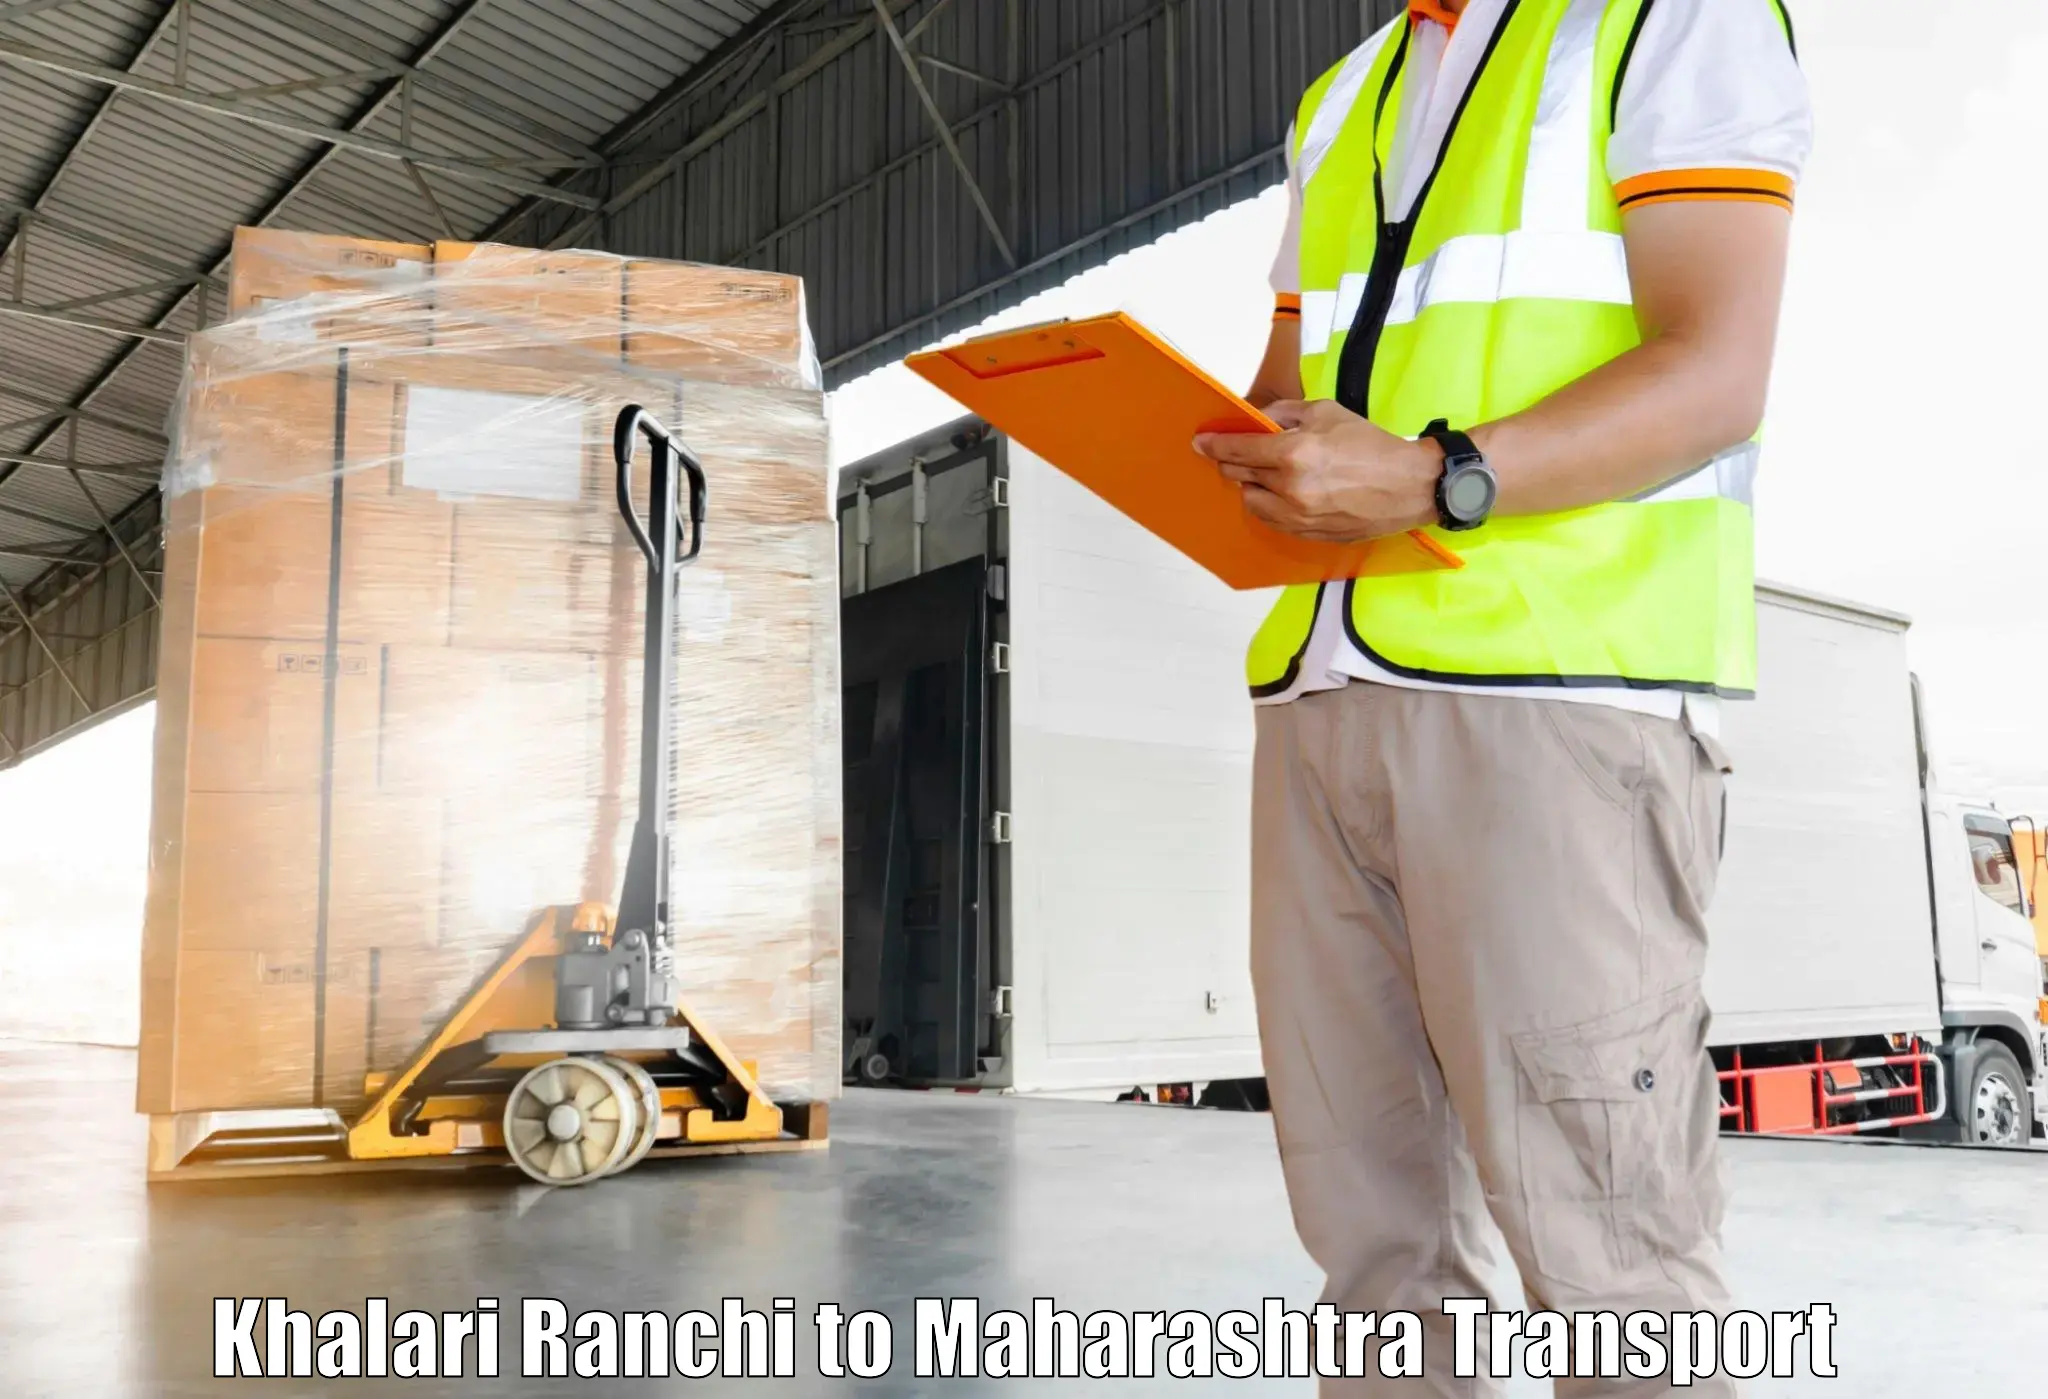 Truck transport companies in India Khalari Ranchi to Warora